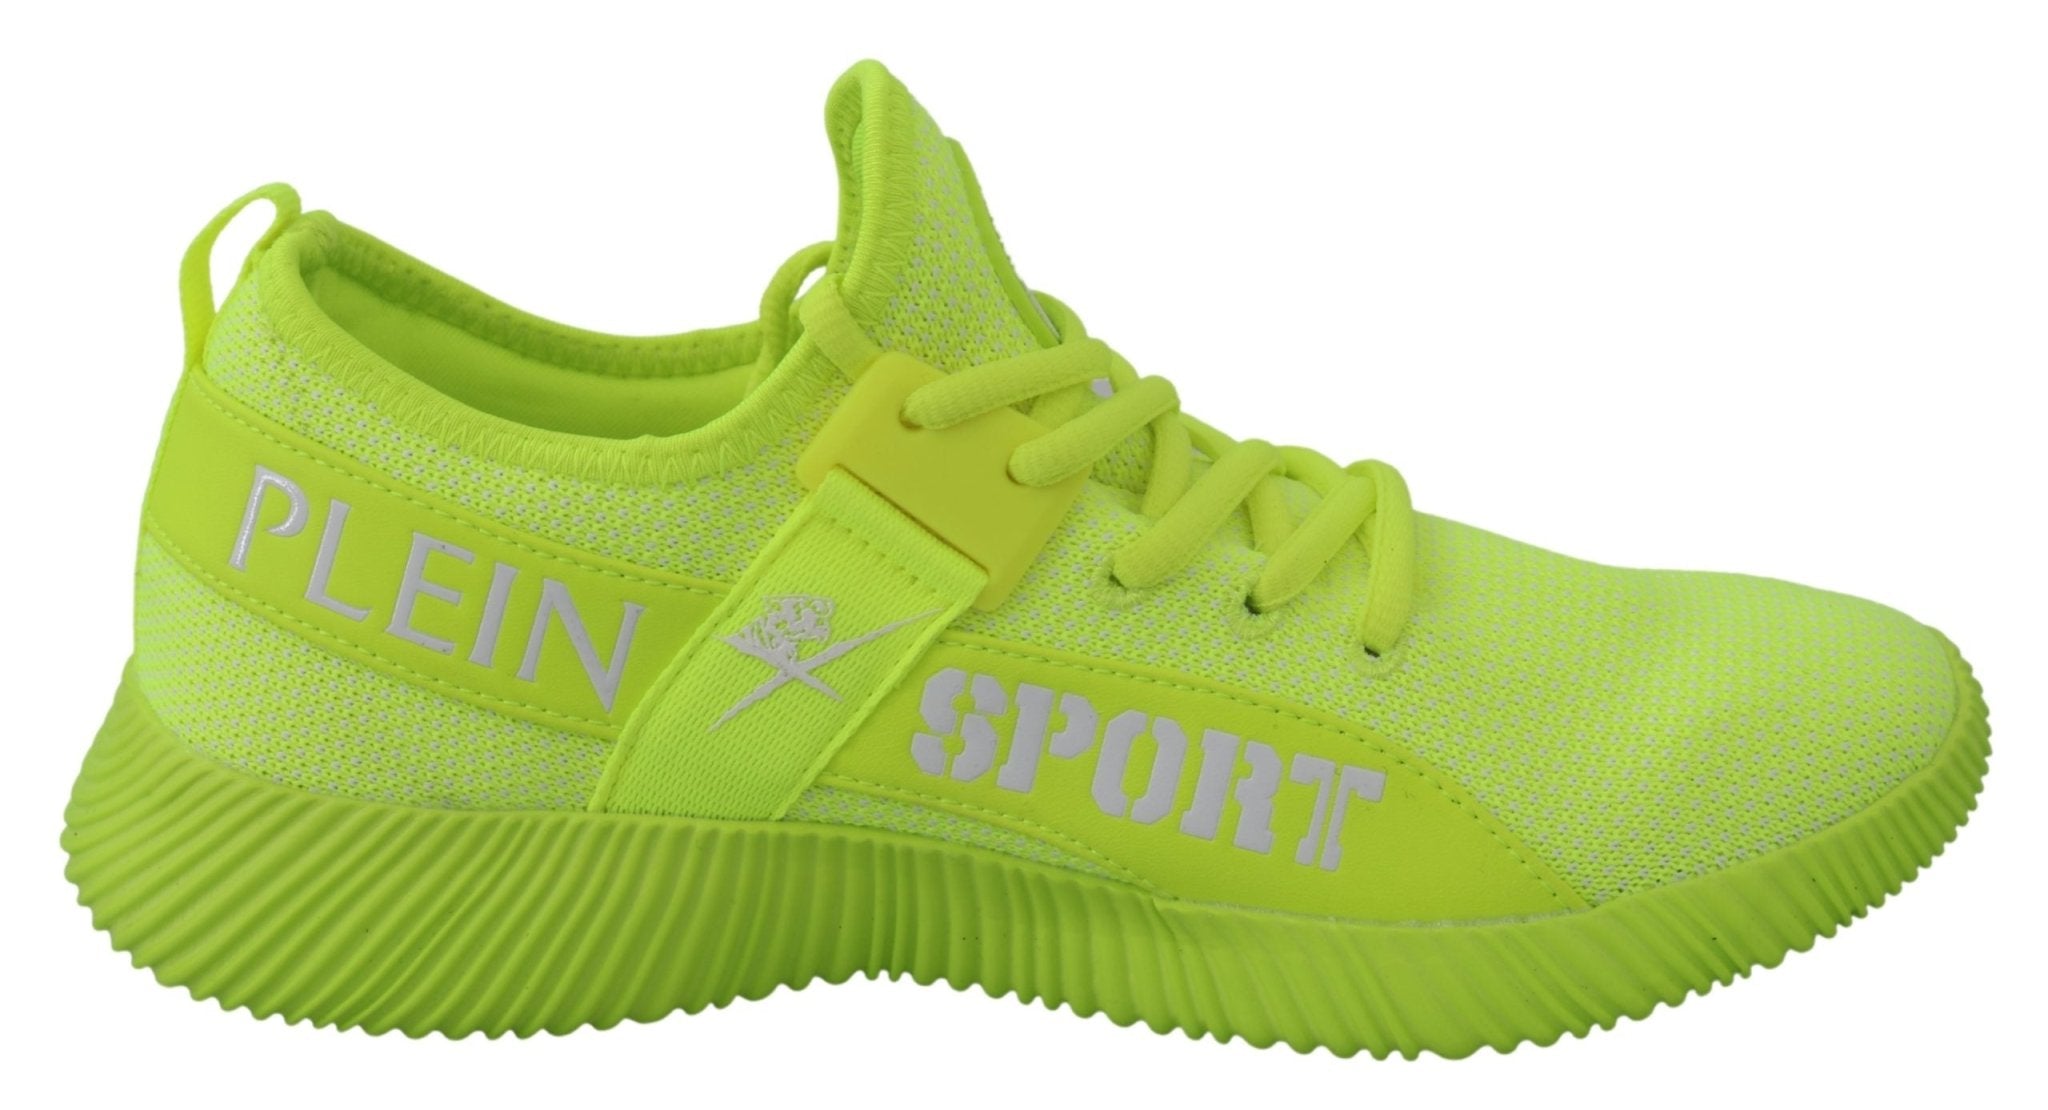 Plein Sport Msc sneakers carter yellow - Fizigo